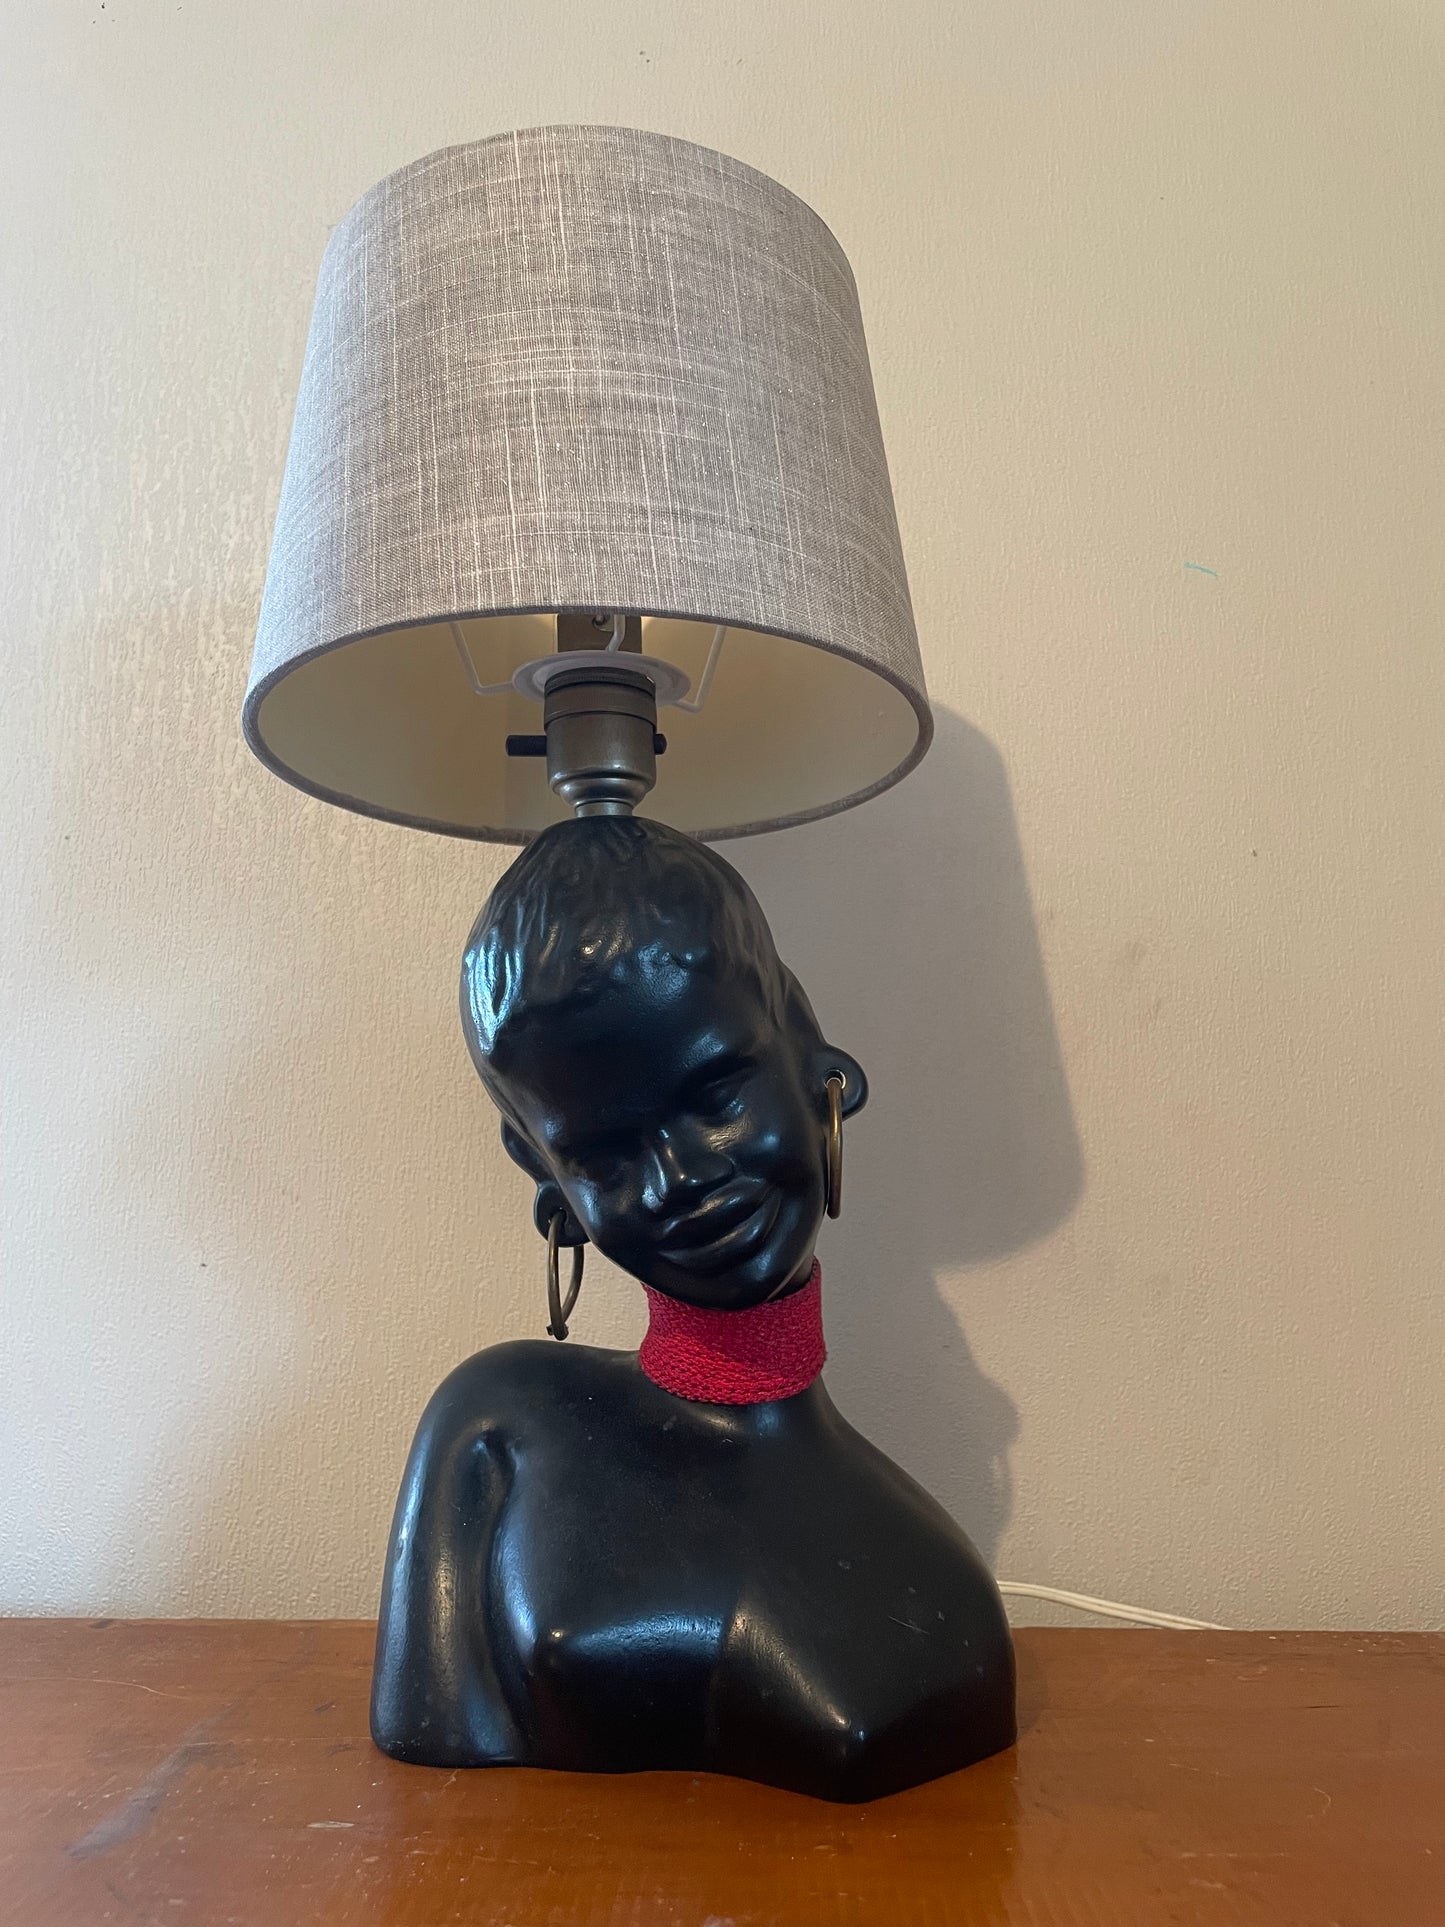 1960’s Barsony style lamp